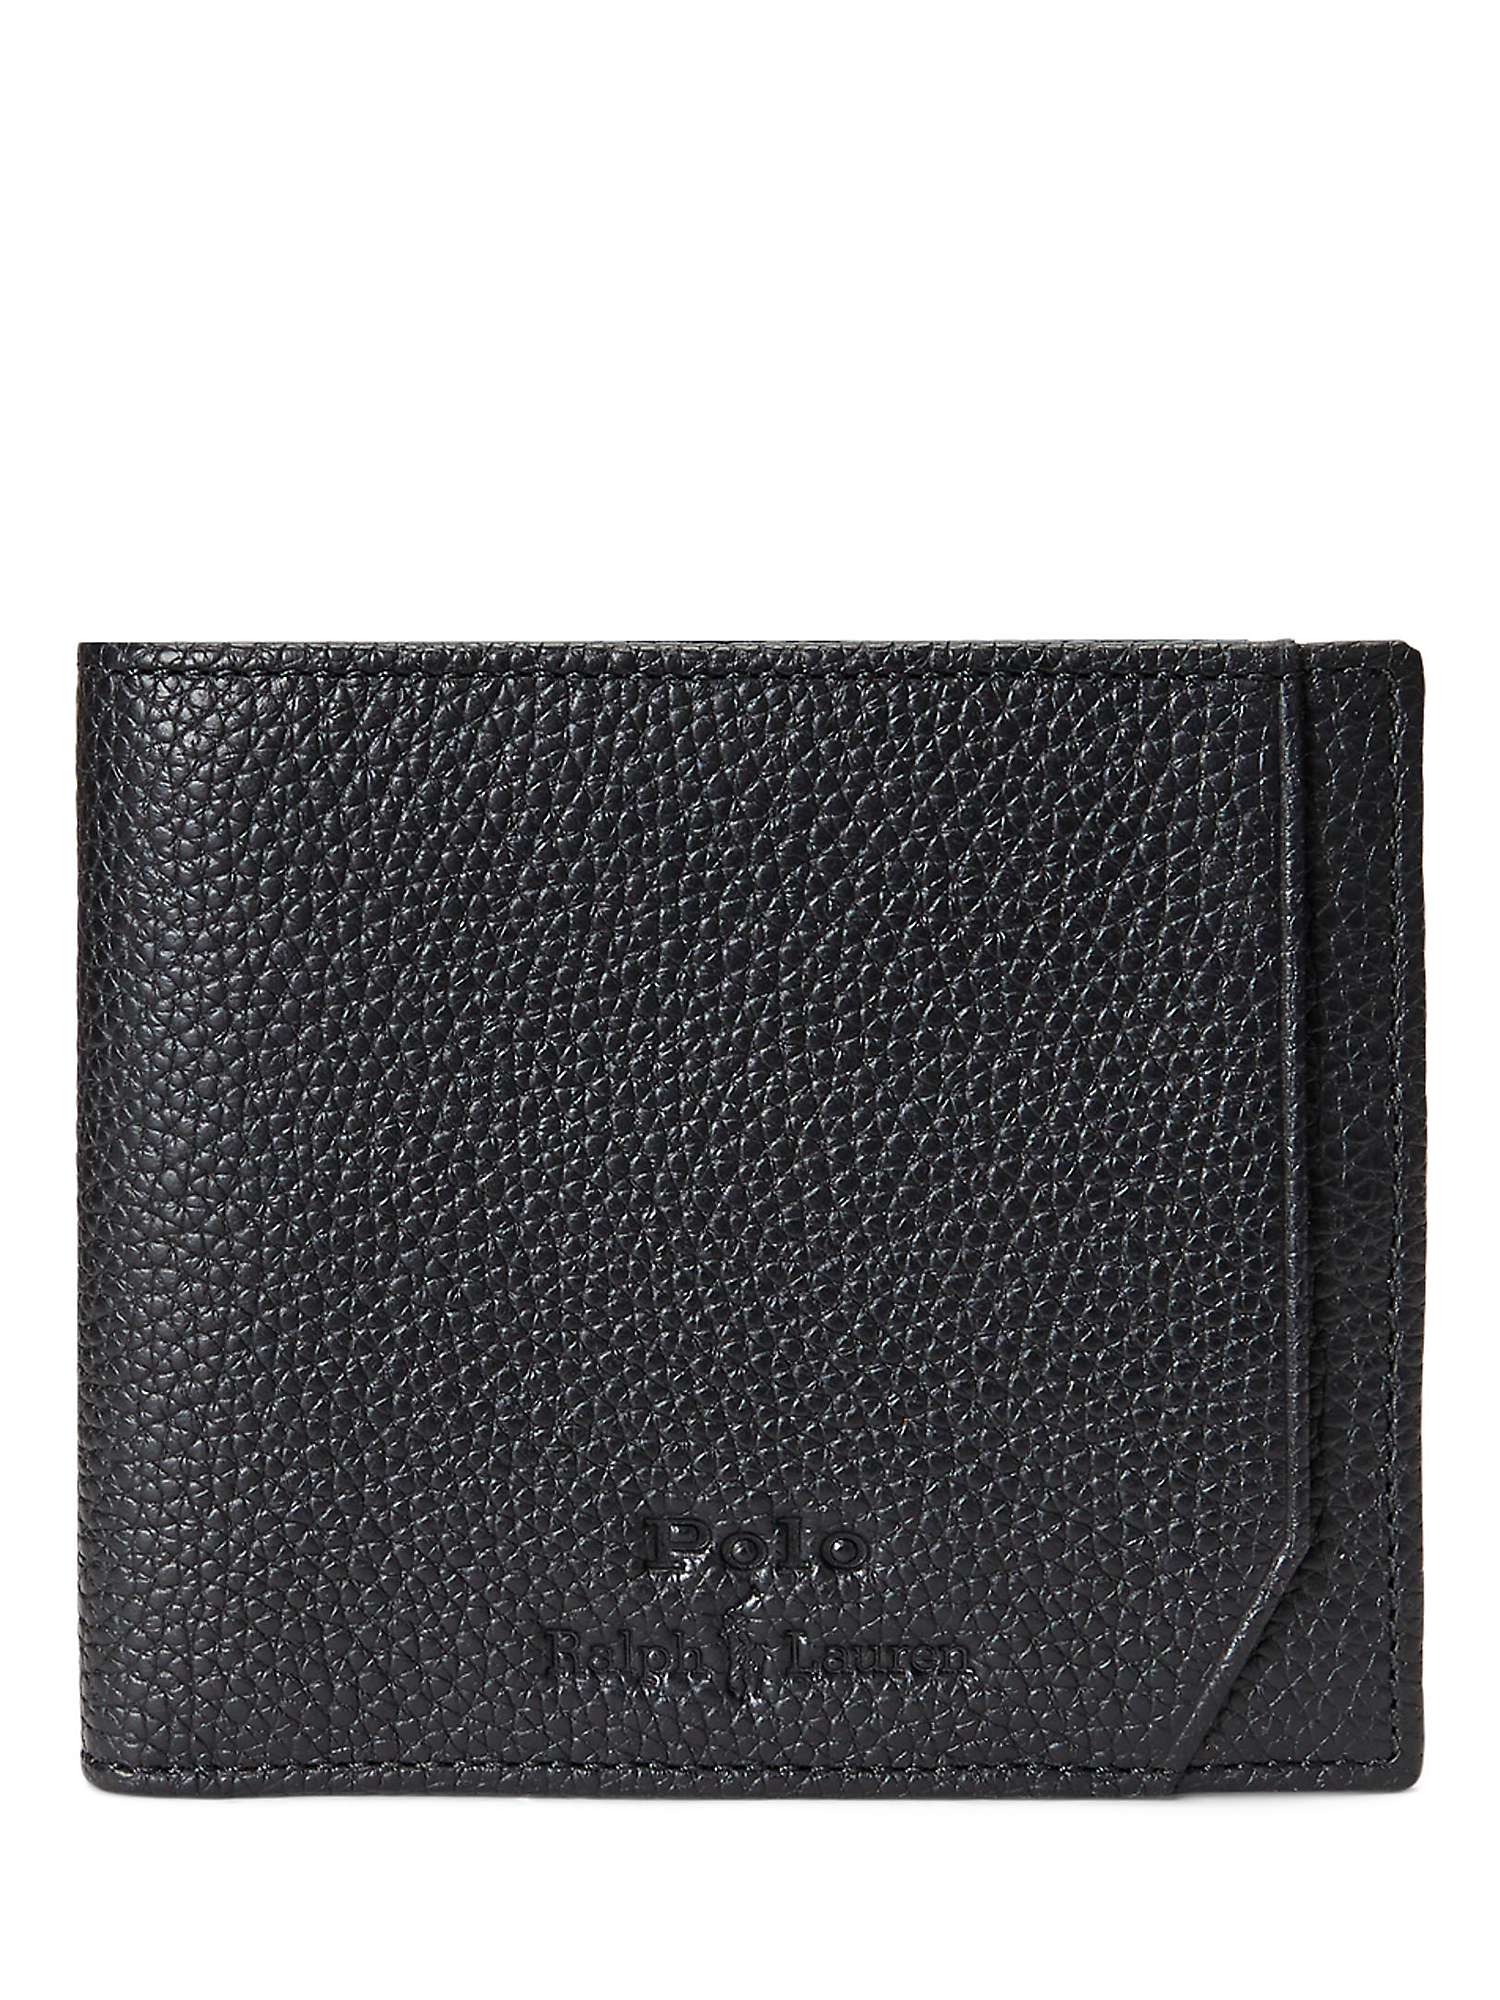 Buy Polo Ralph Lauren Pebbled Leather Wallet, Black Online at johnlewis.com